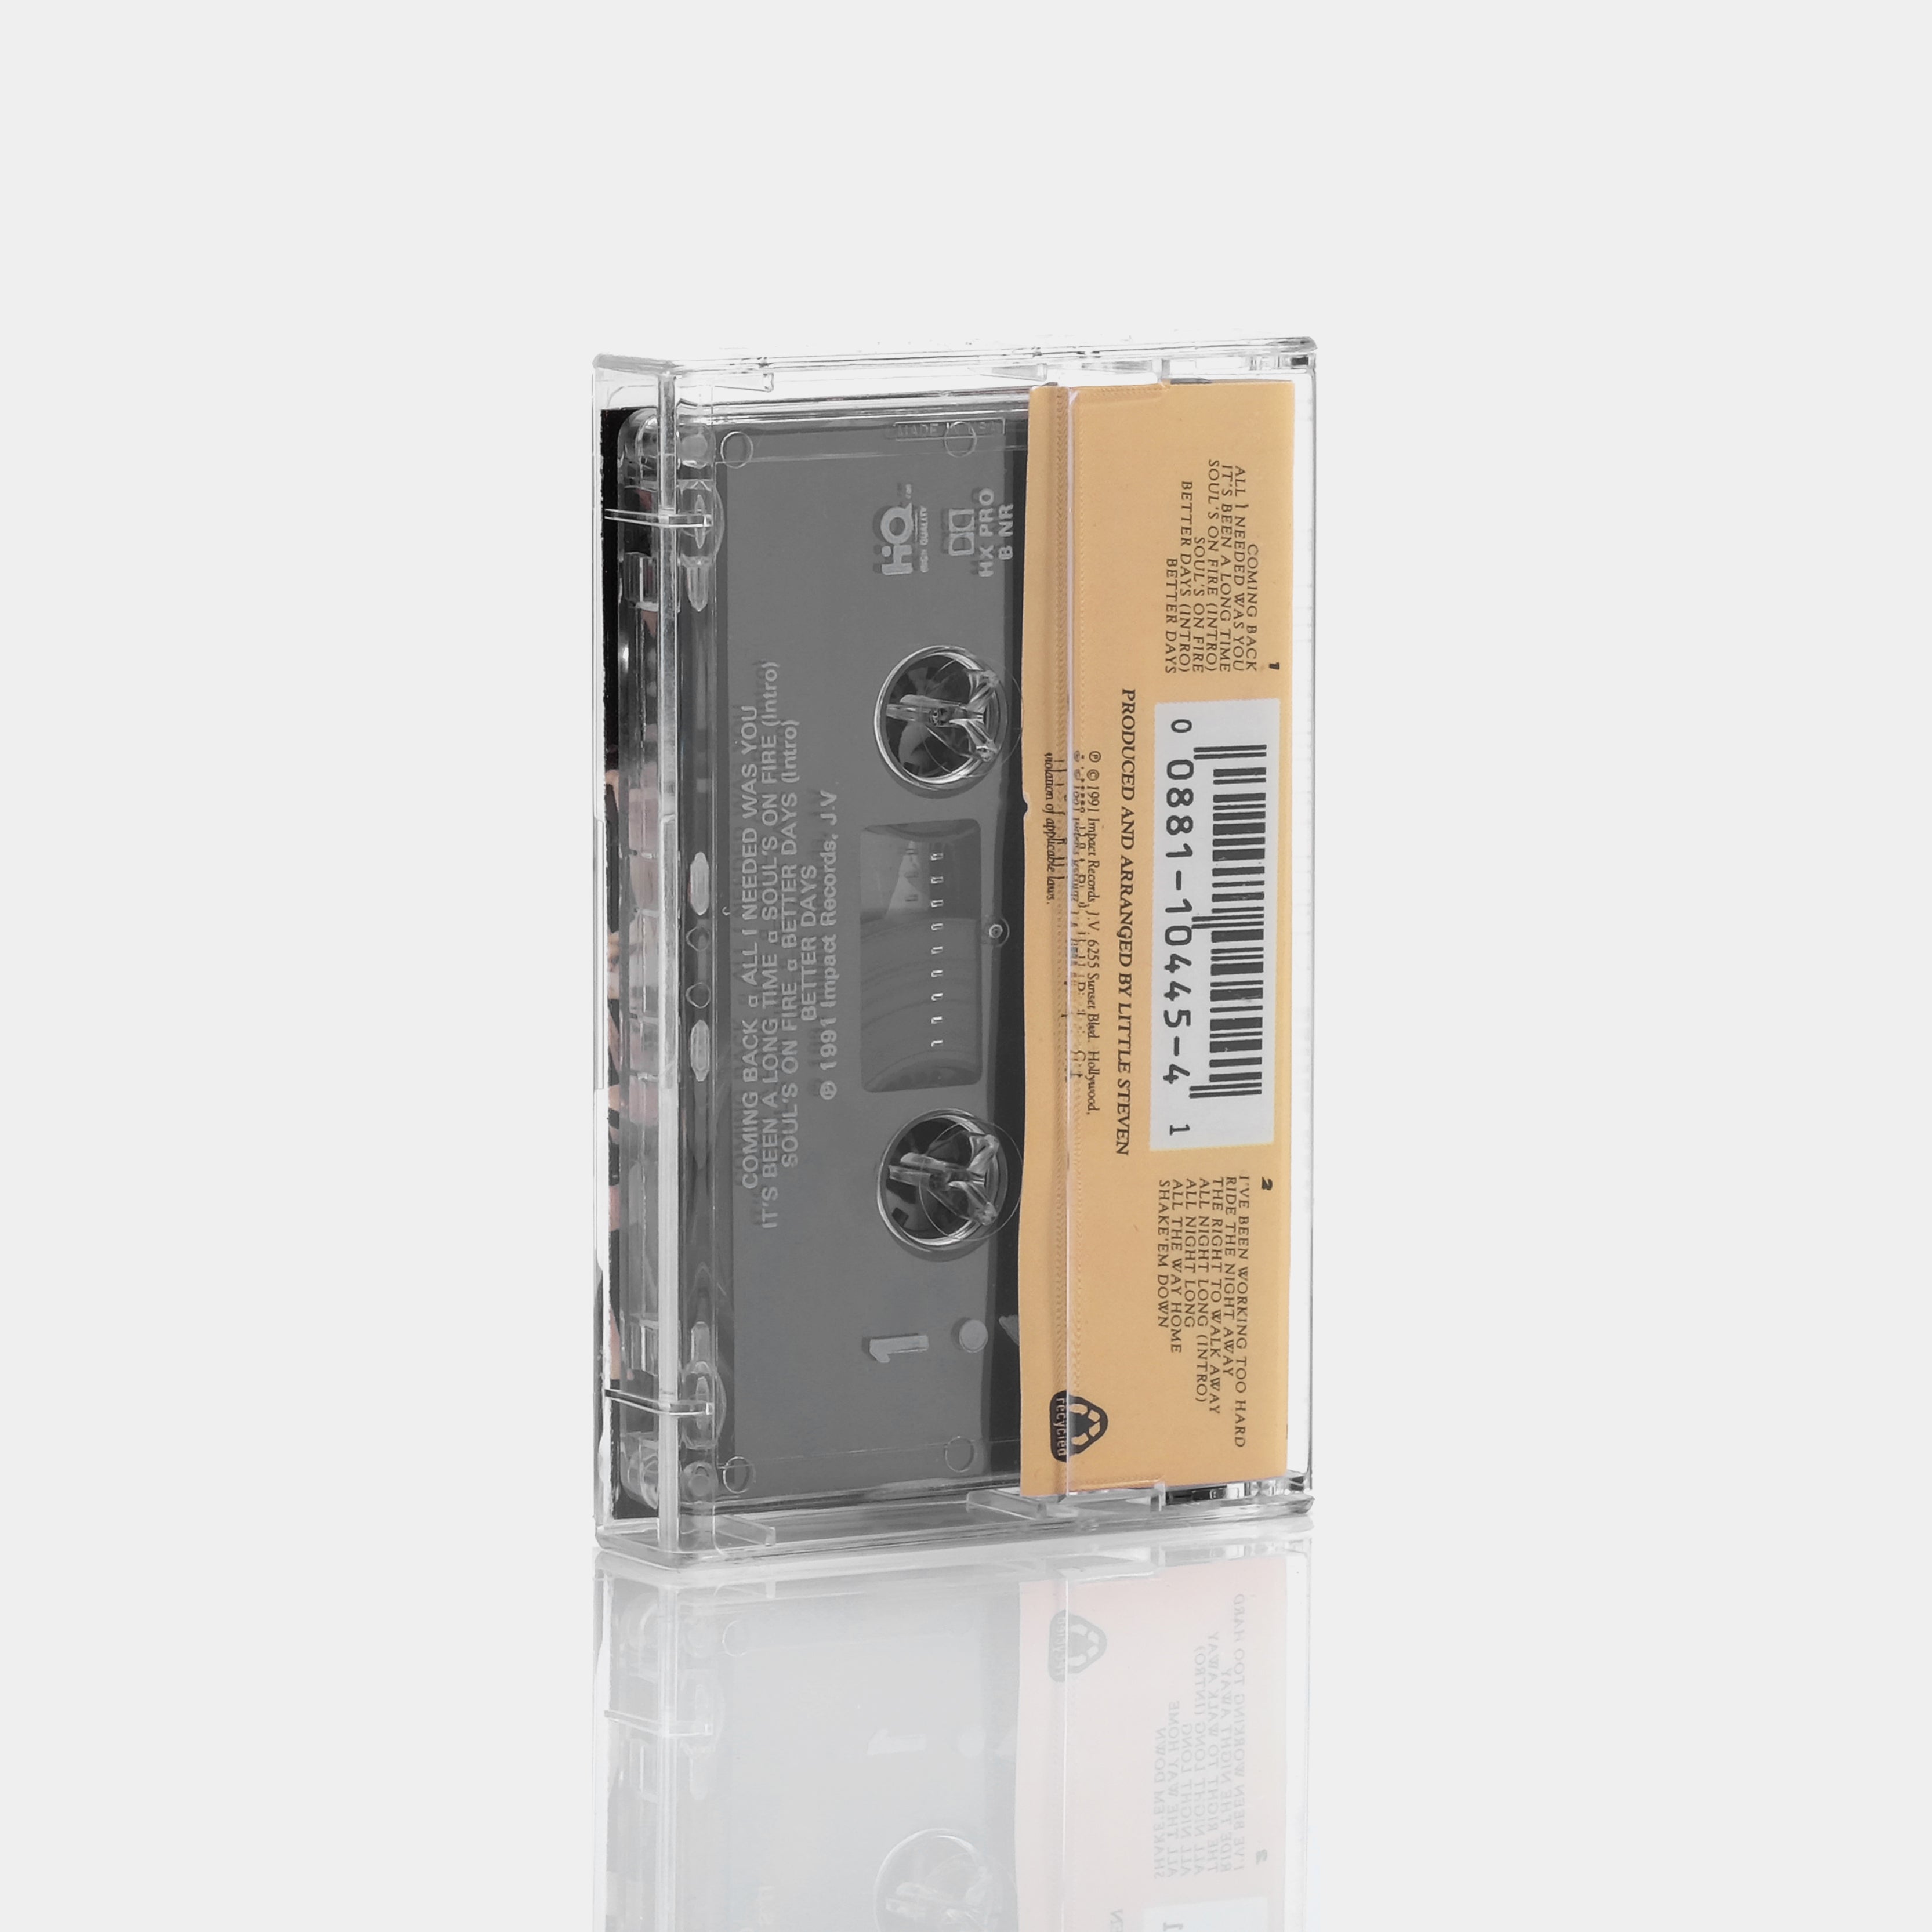 Southside Johnny & The Asbury Jukes - Better Days Cassette Tape